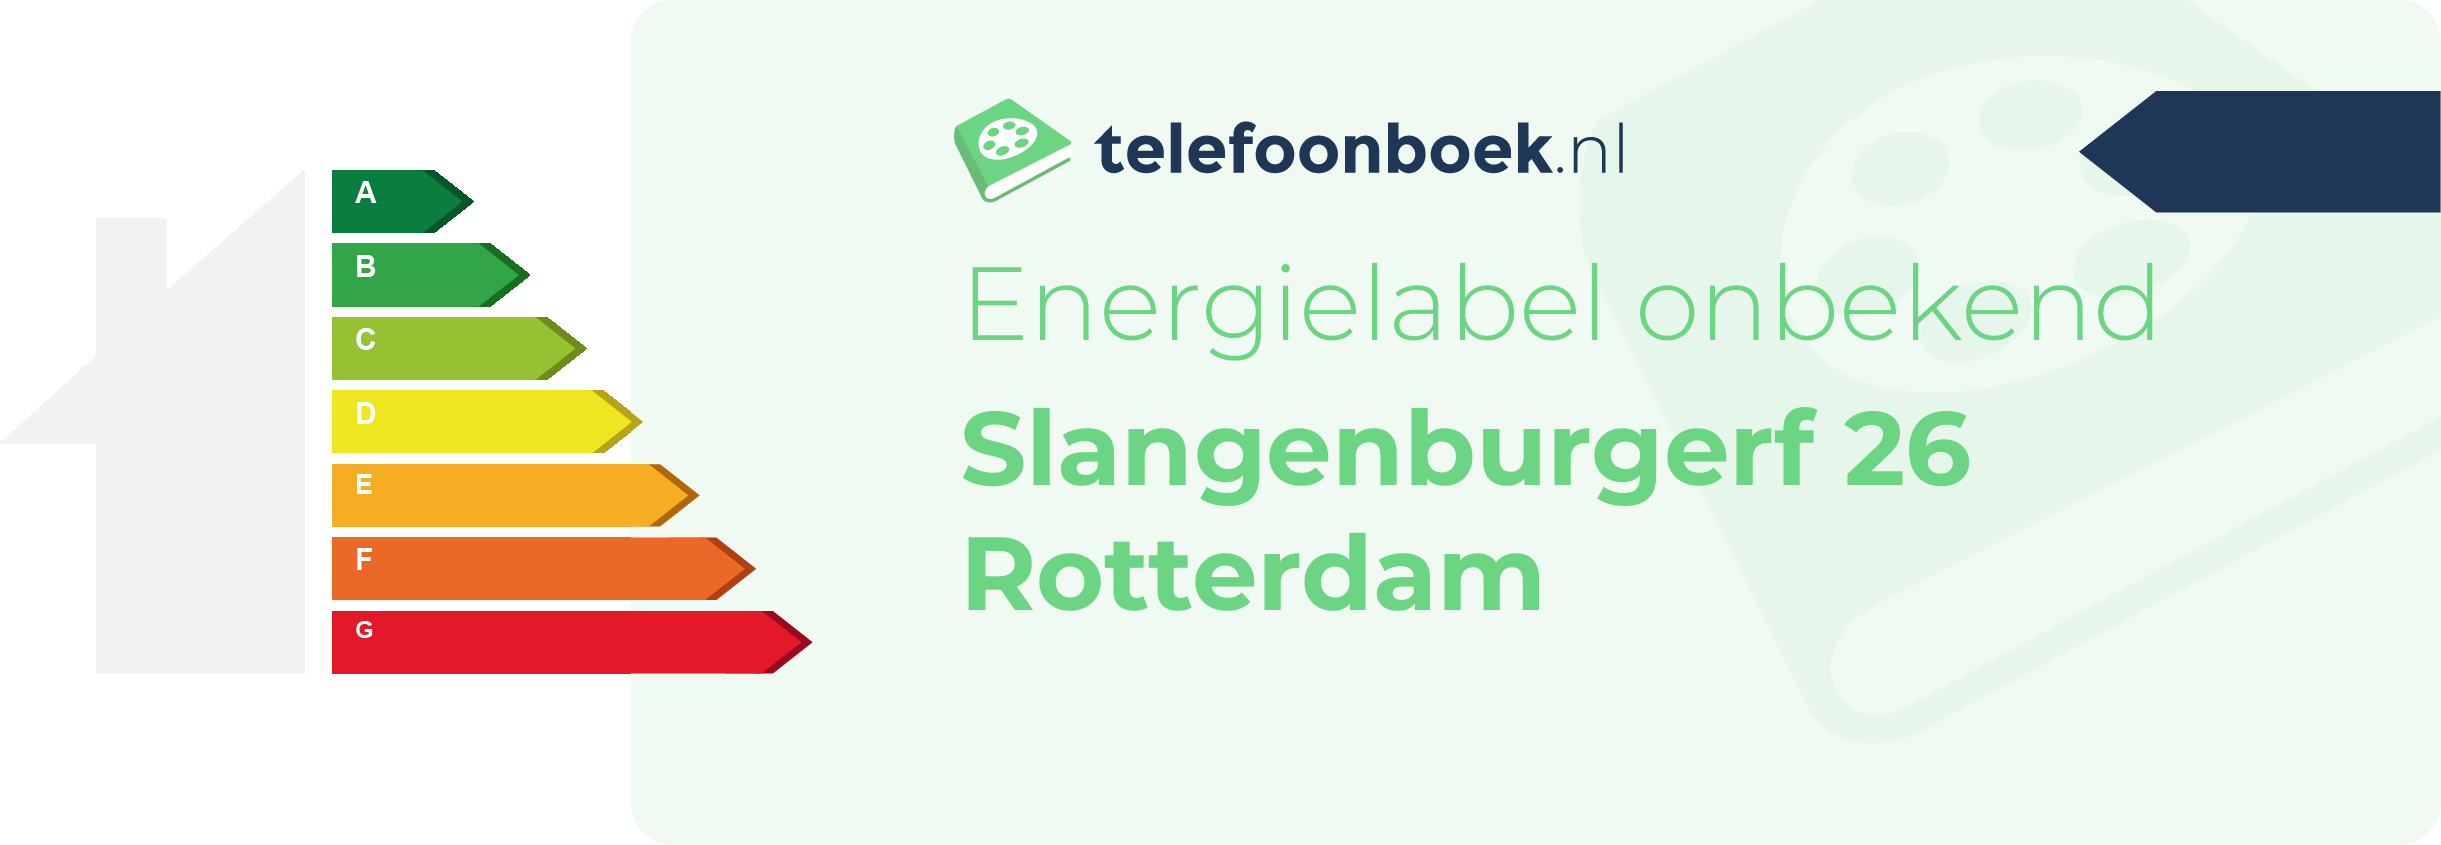 Energielabel Slangenburgerf 26 Rotterdam